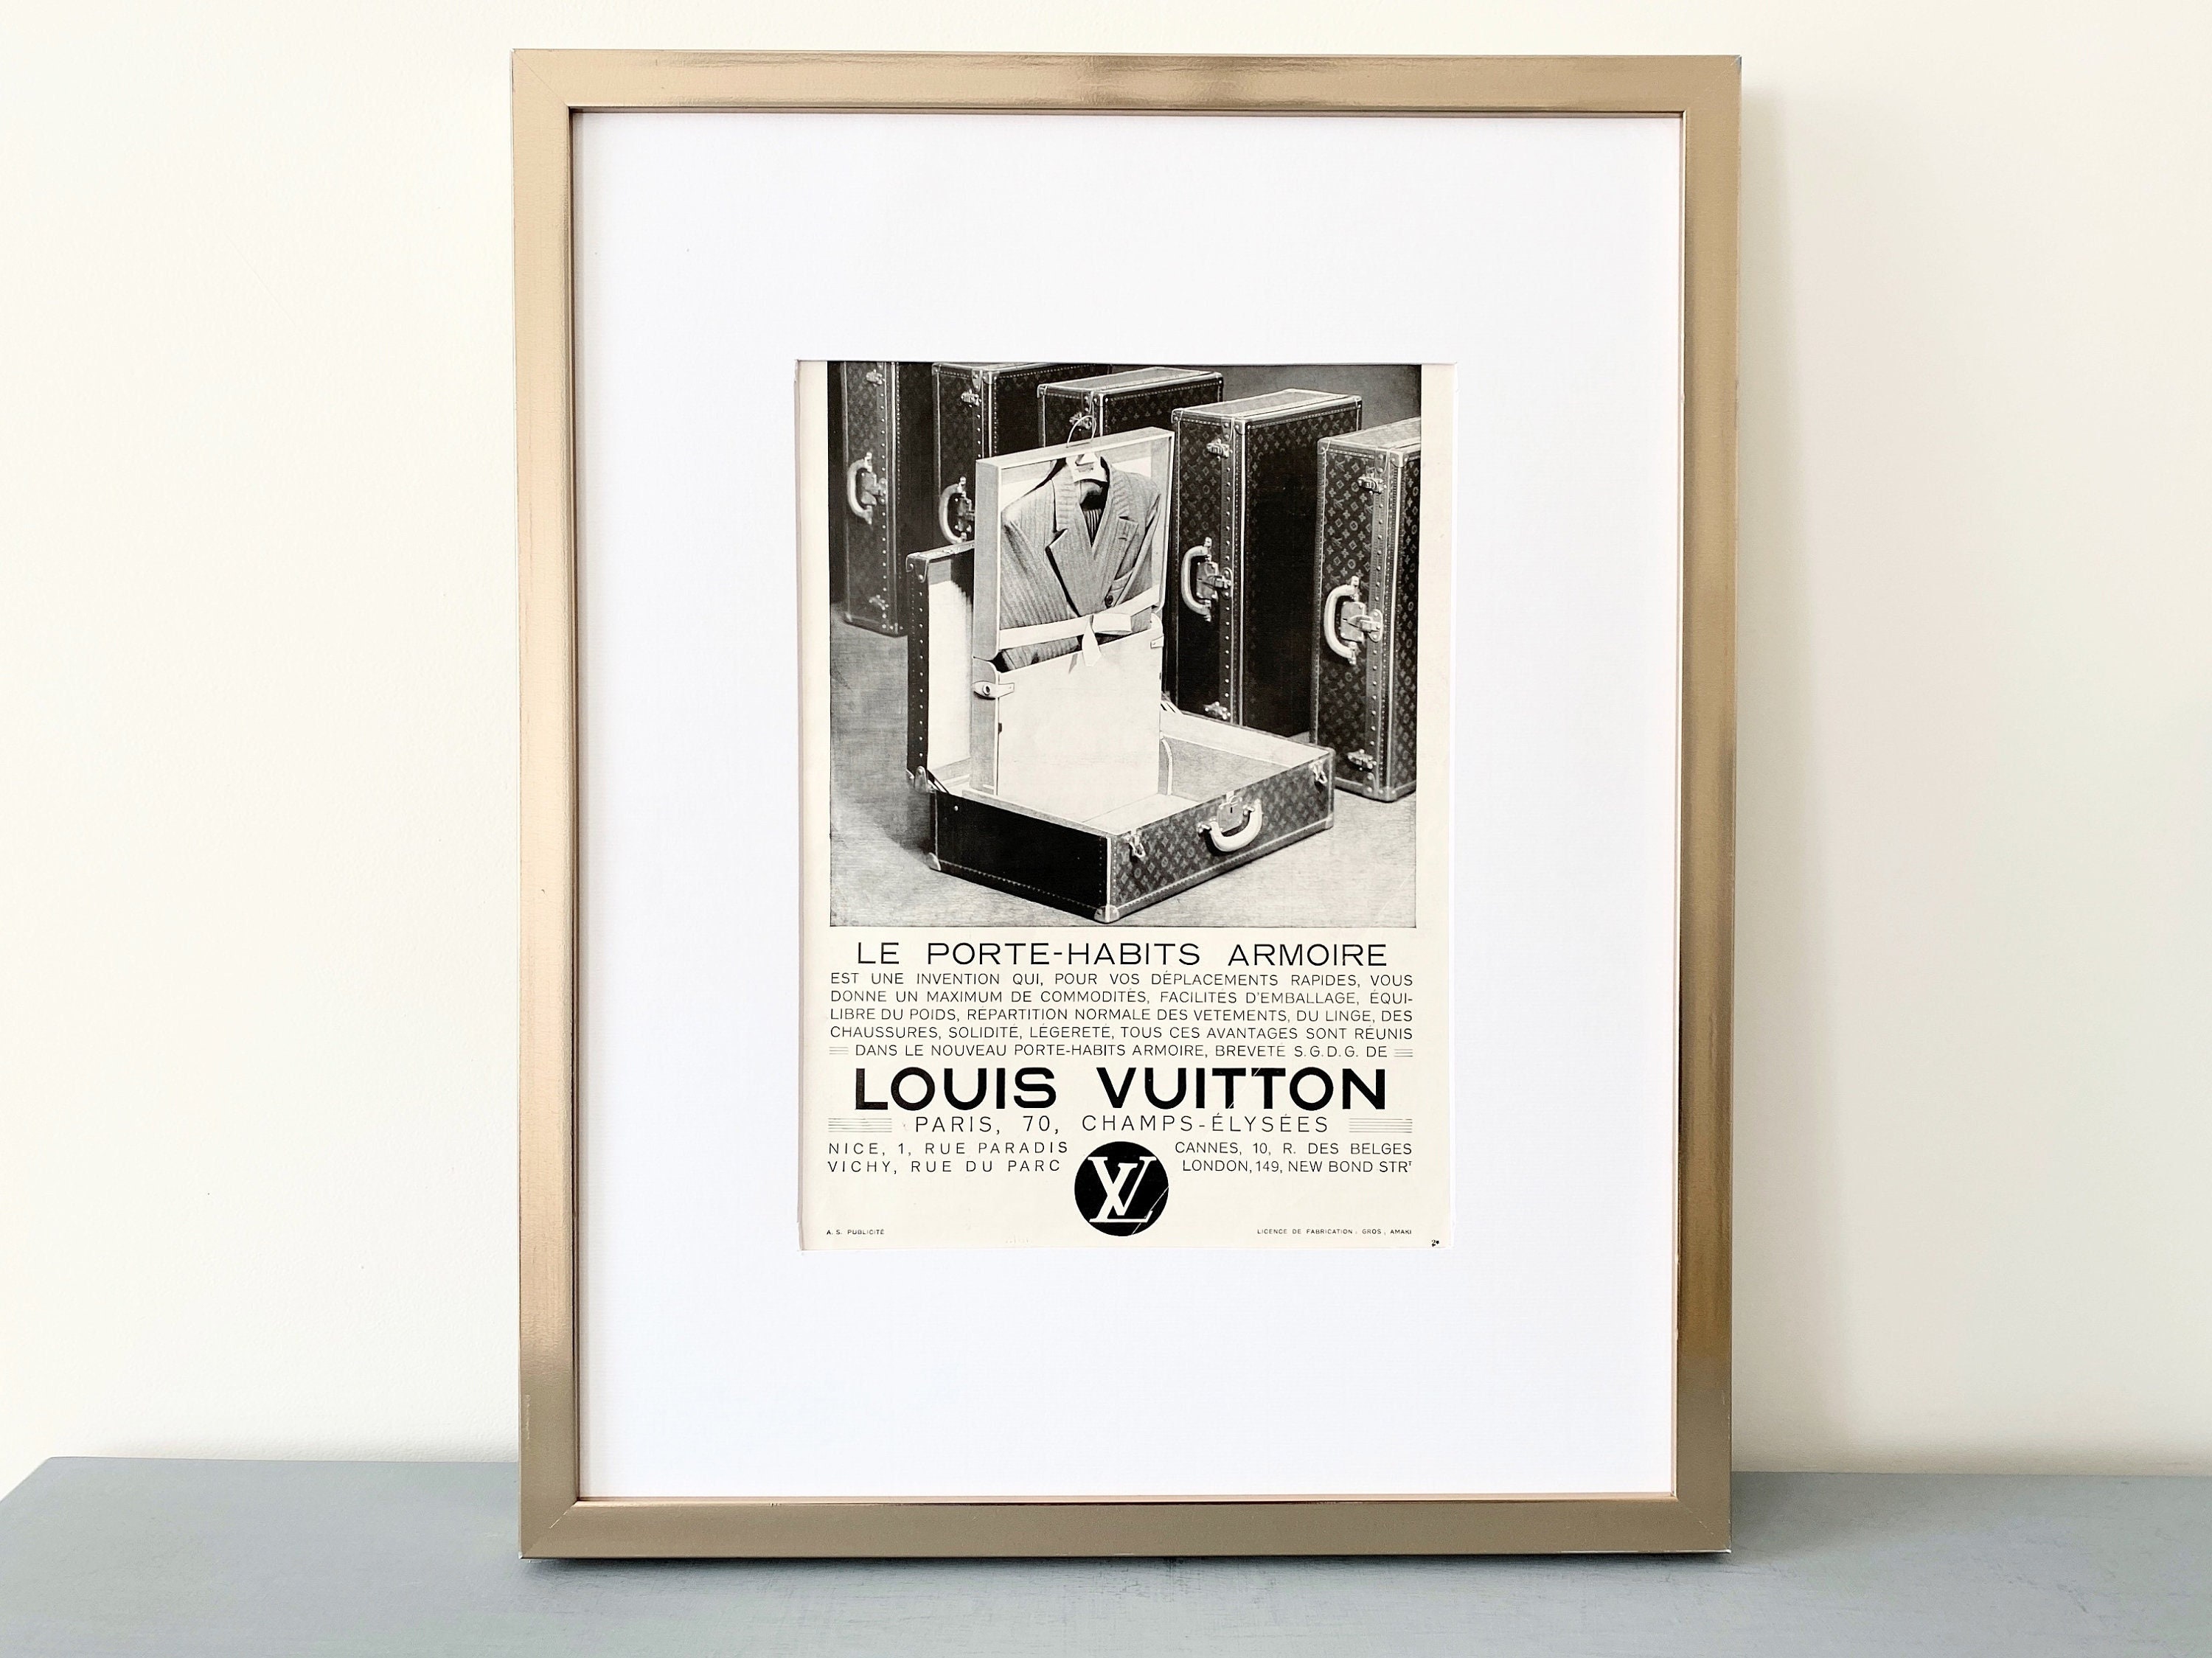 Louis Vuitton Monogram Multicolor Art, Fashion and Architecture Book